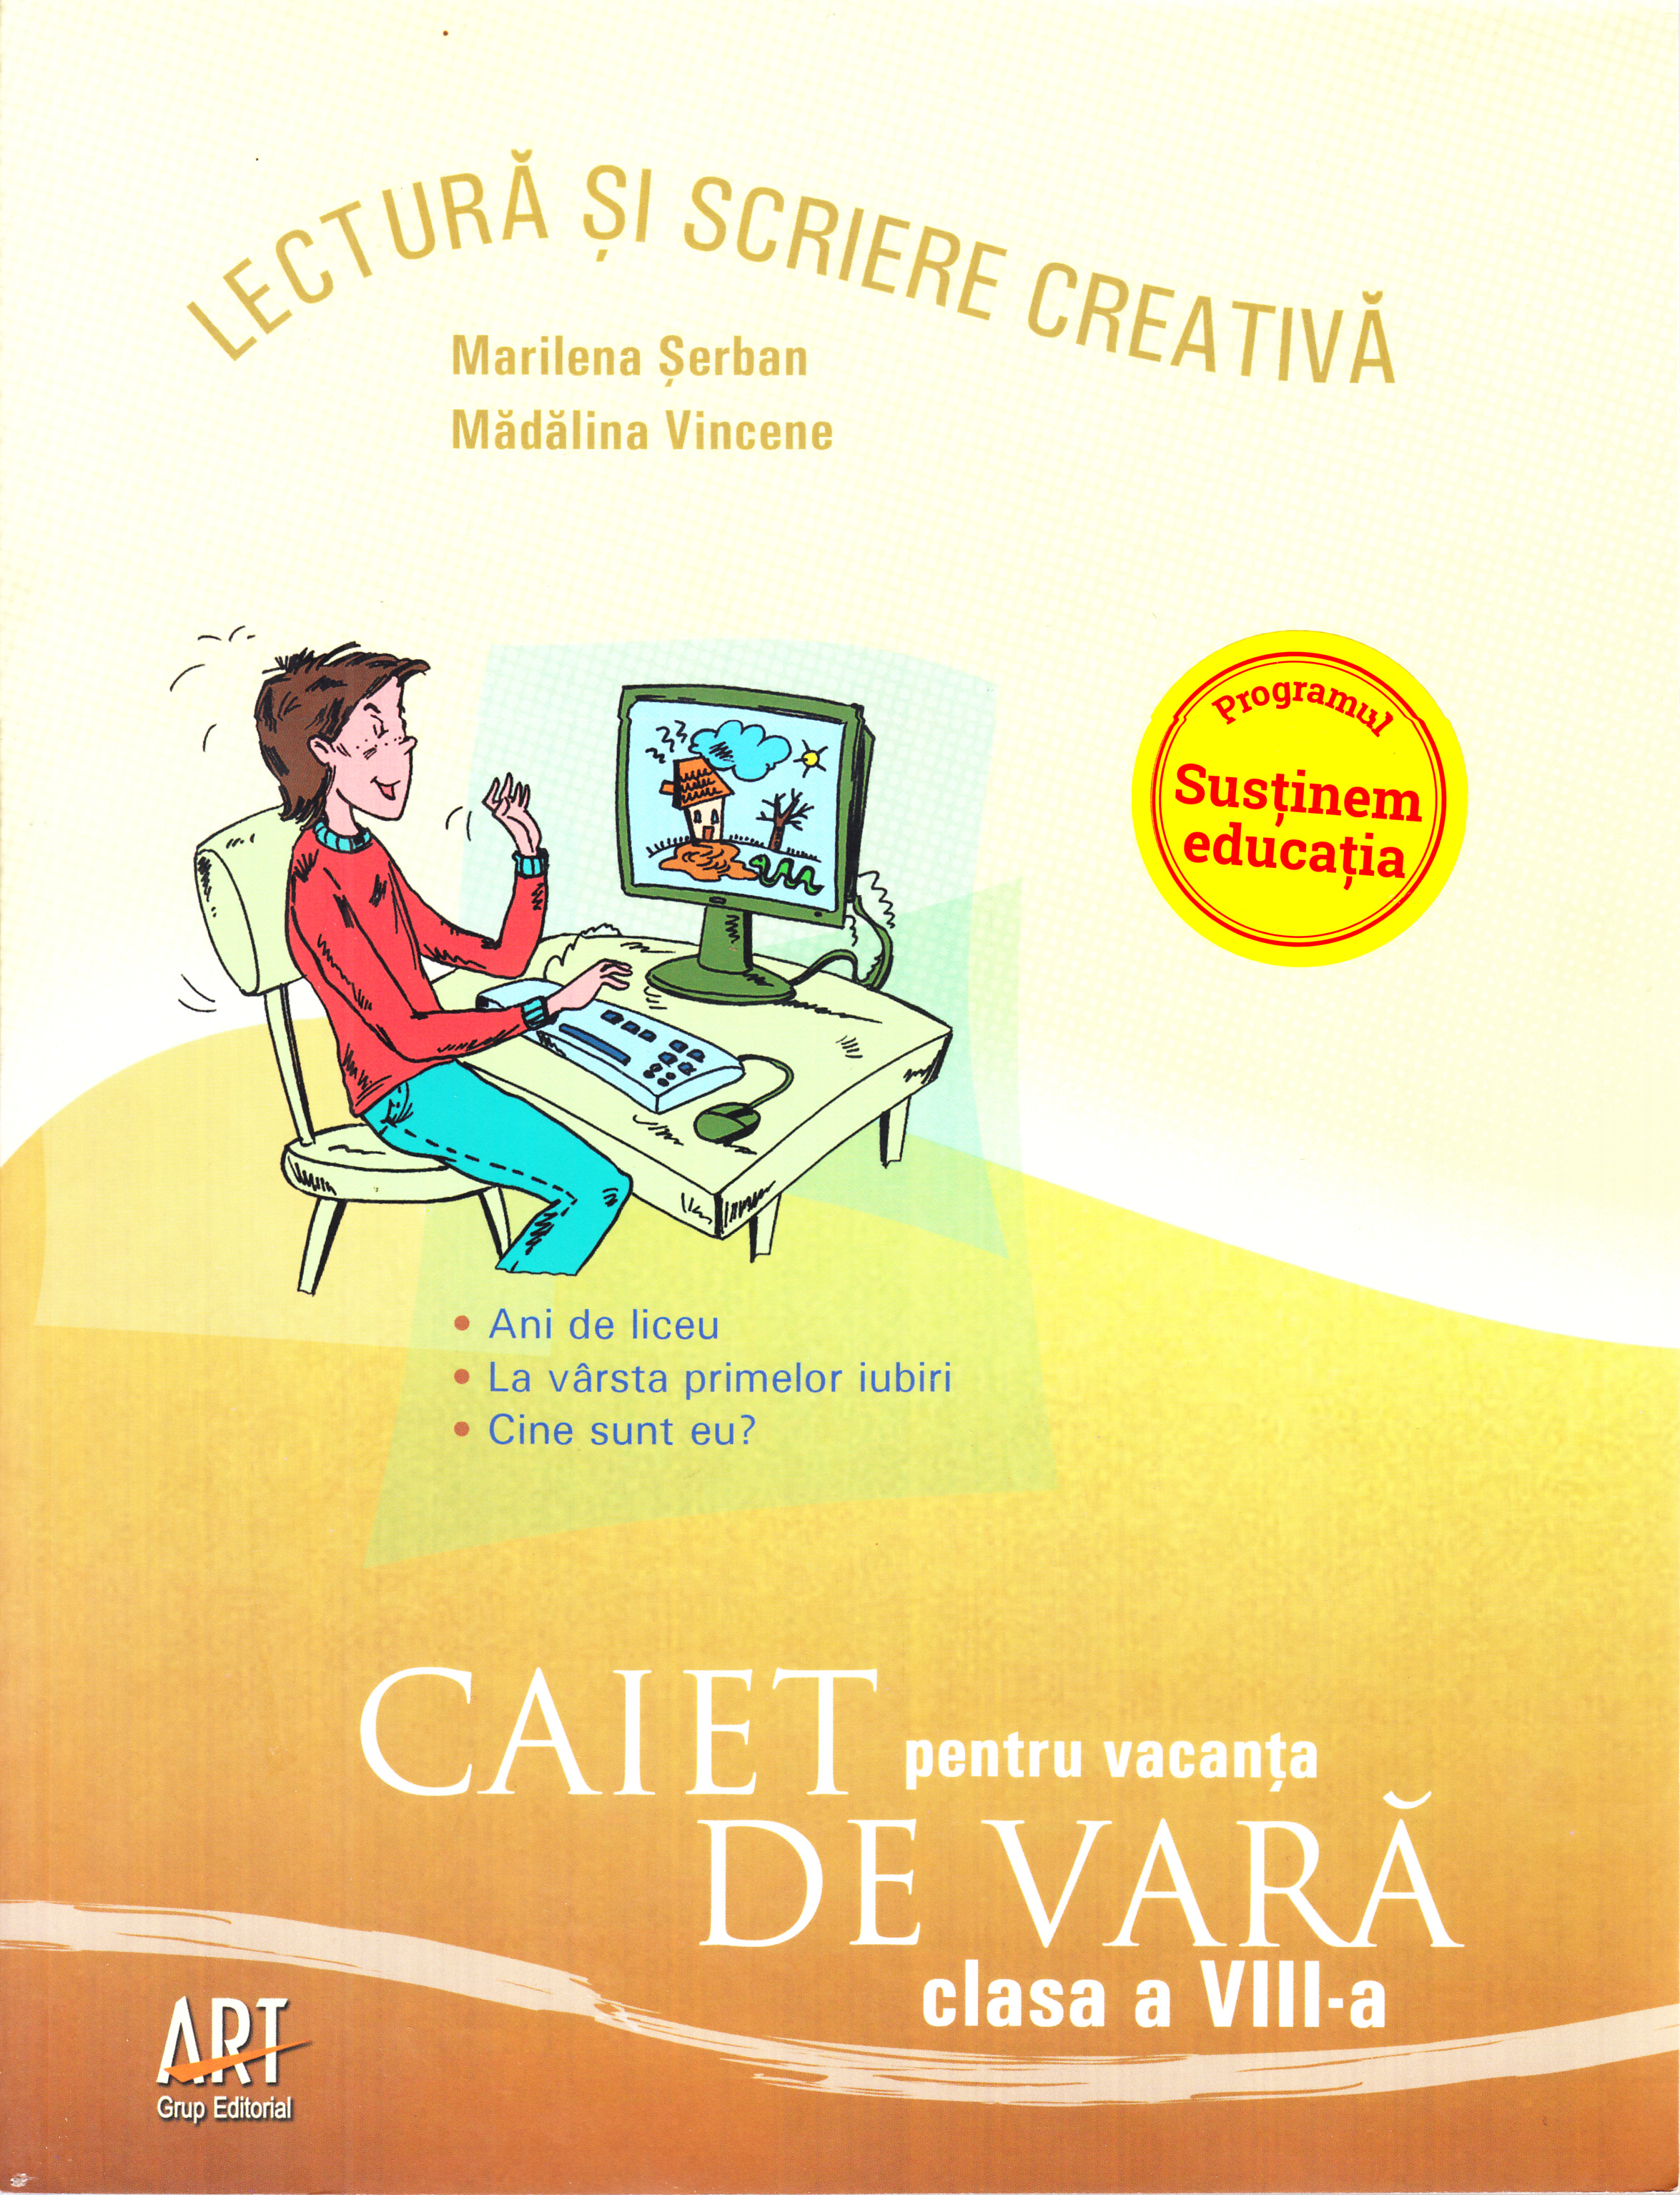 Caiet pentru vacanta de vara - Clasa 8 - Lectura si scriere creativa - Marilena Serban, Madalina Vincene